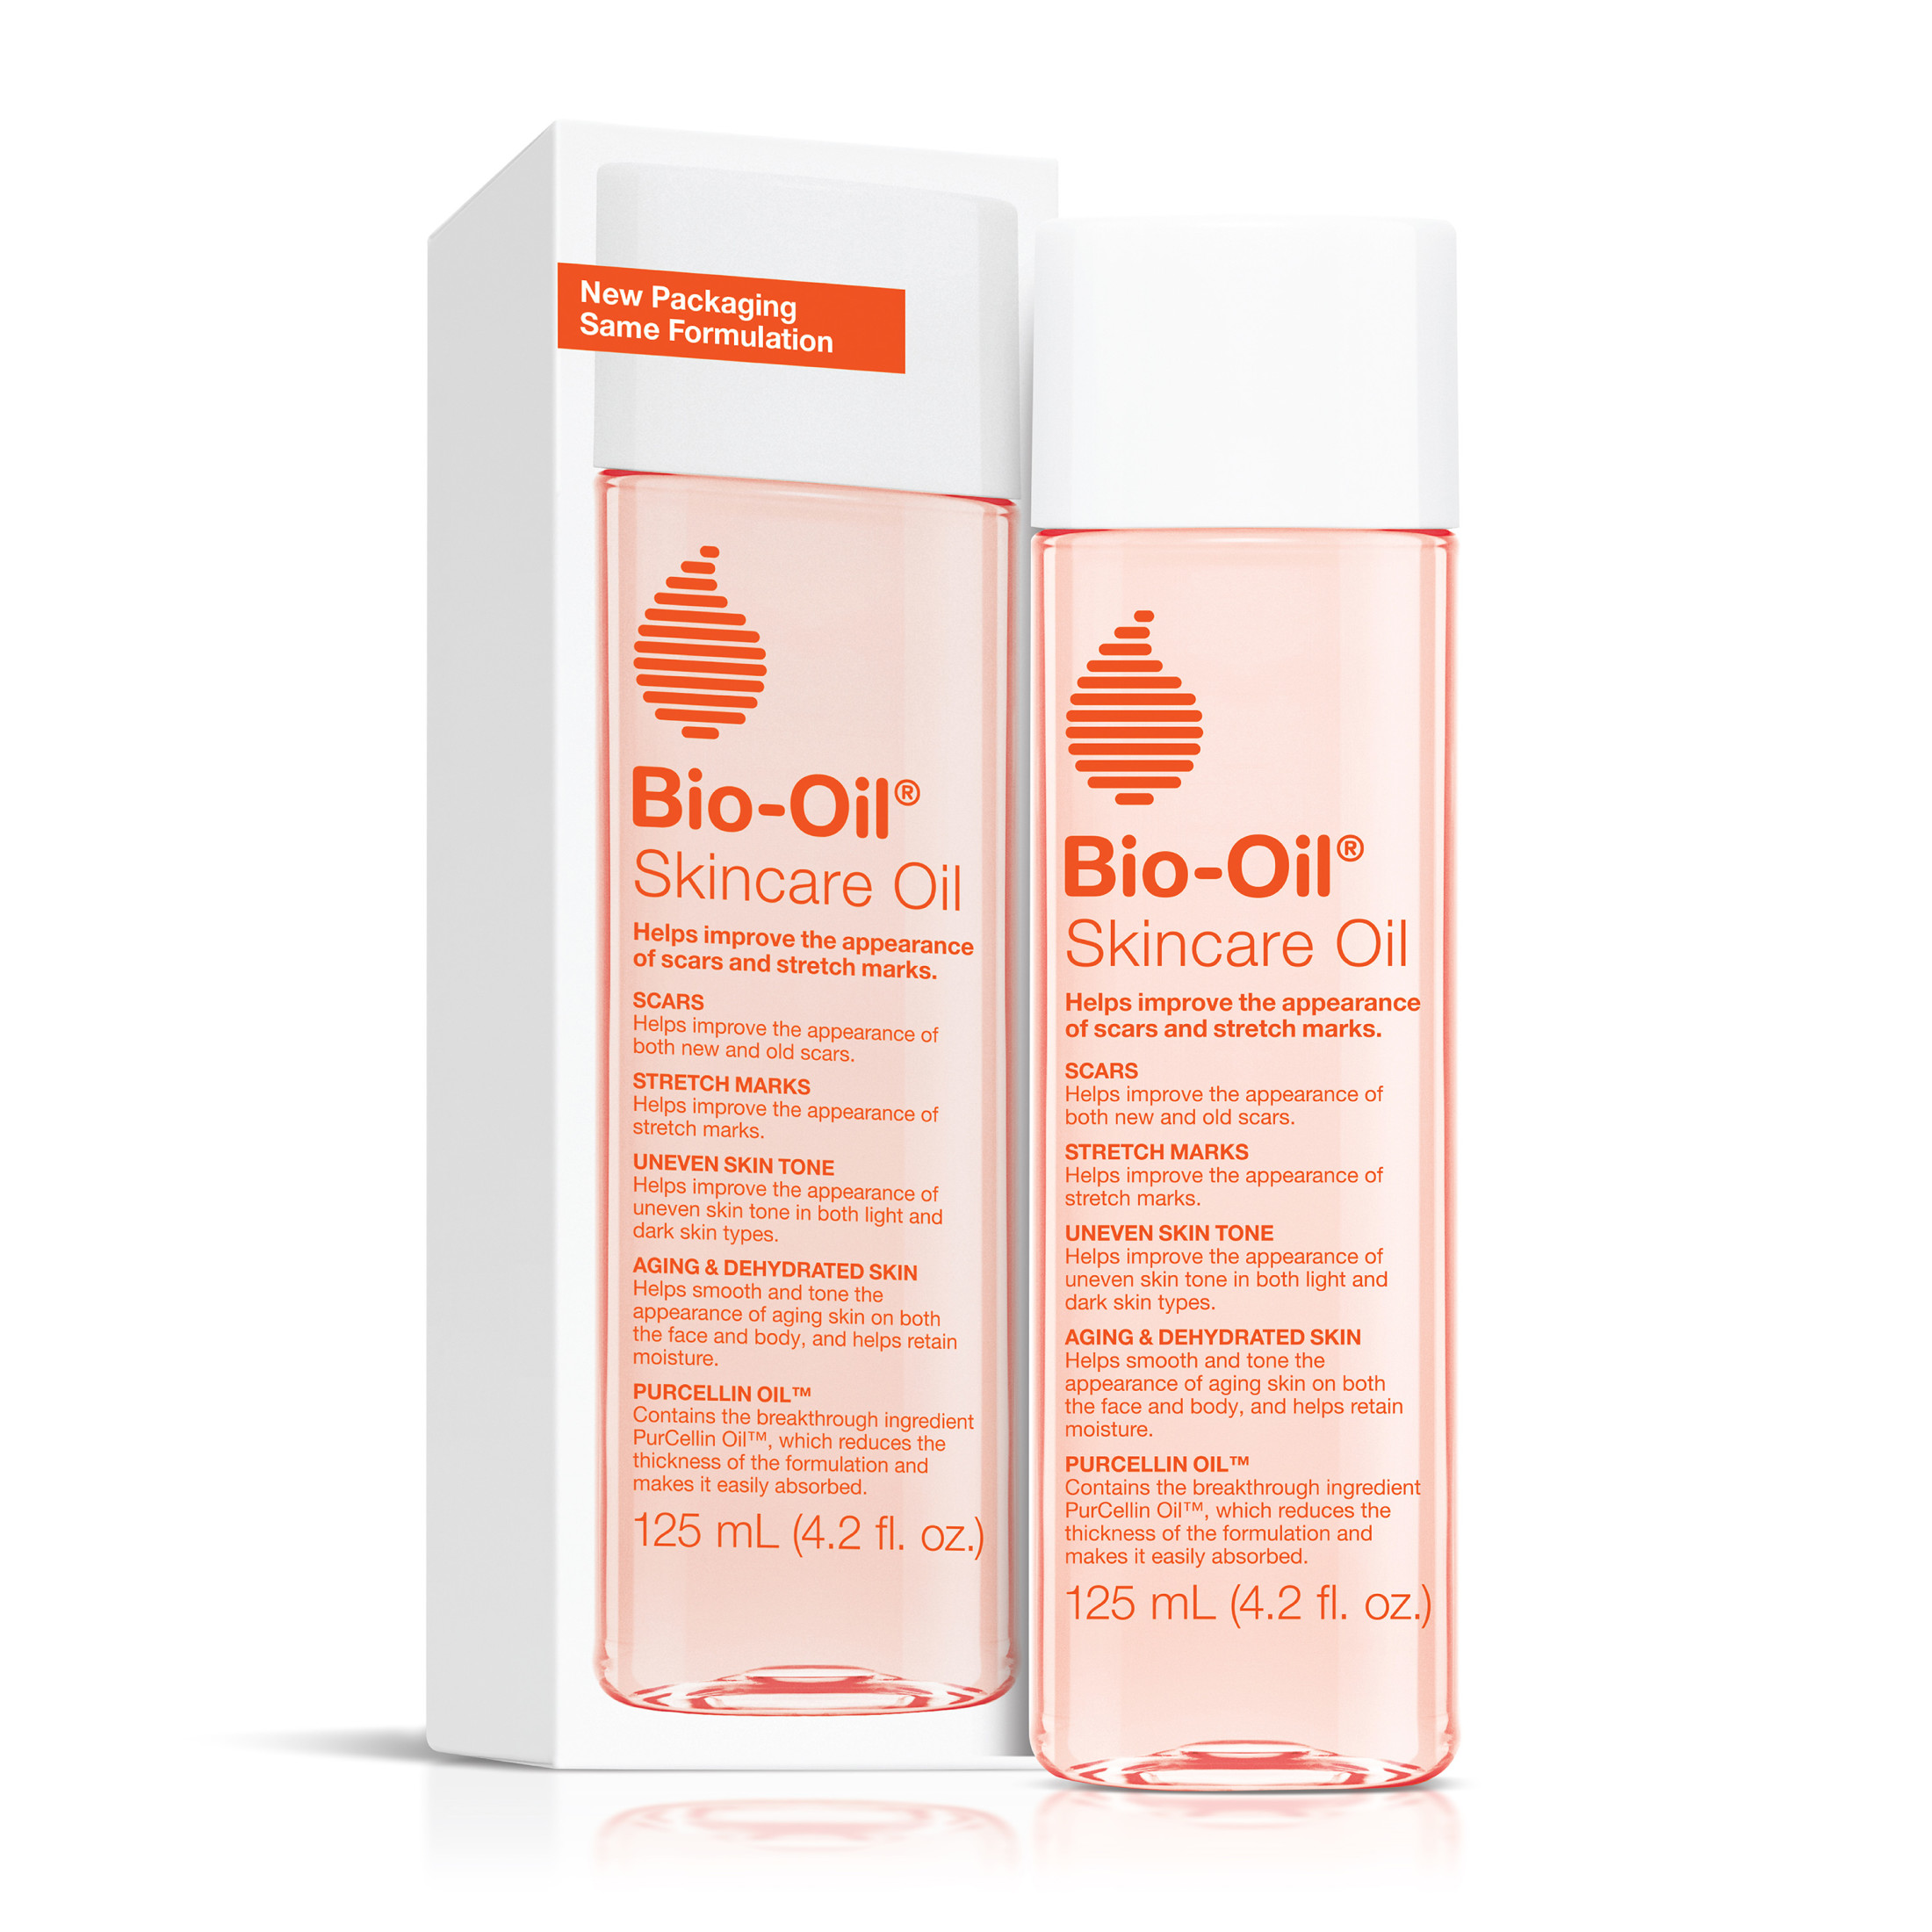 Bio-Oil Skincare Oil, Body Oil for Scars & Stretch Marks, Dermatologist Recommended, 4.2 fl oz - image 1 of 11